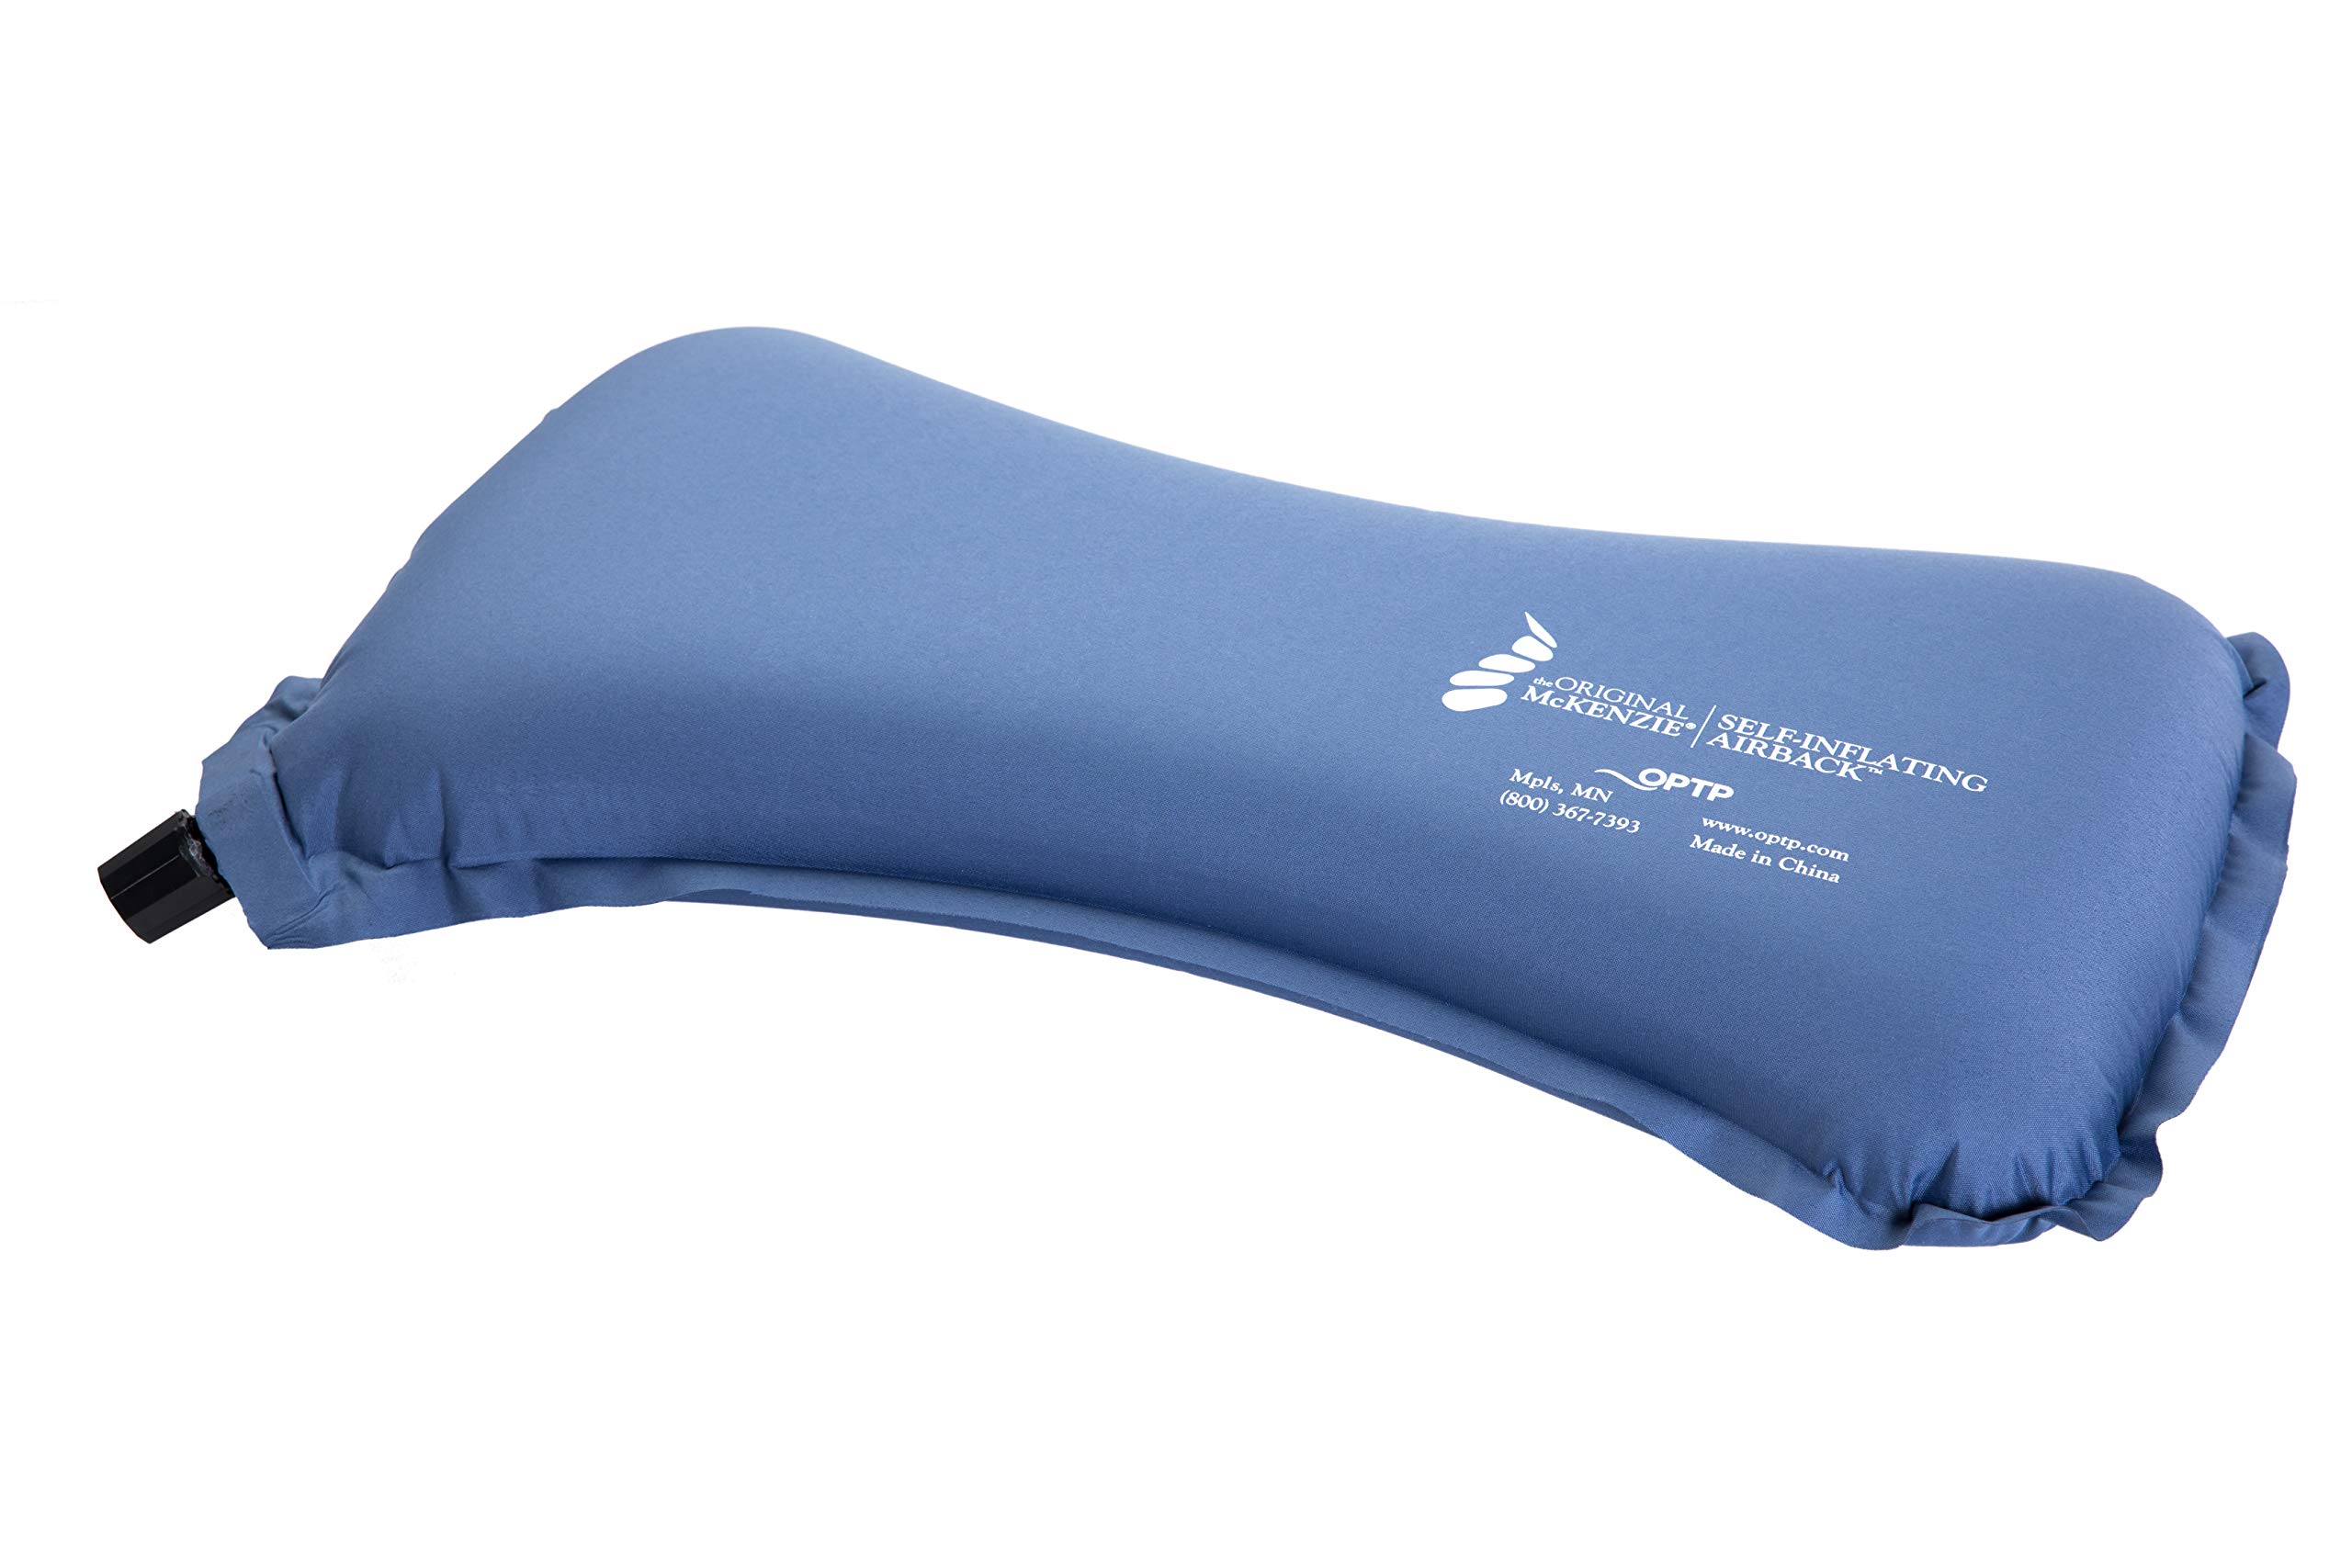 Wonder-Roll Inflating Lumbar Support Pillow